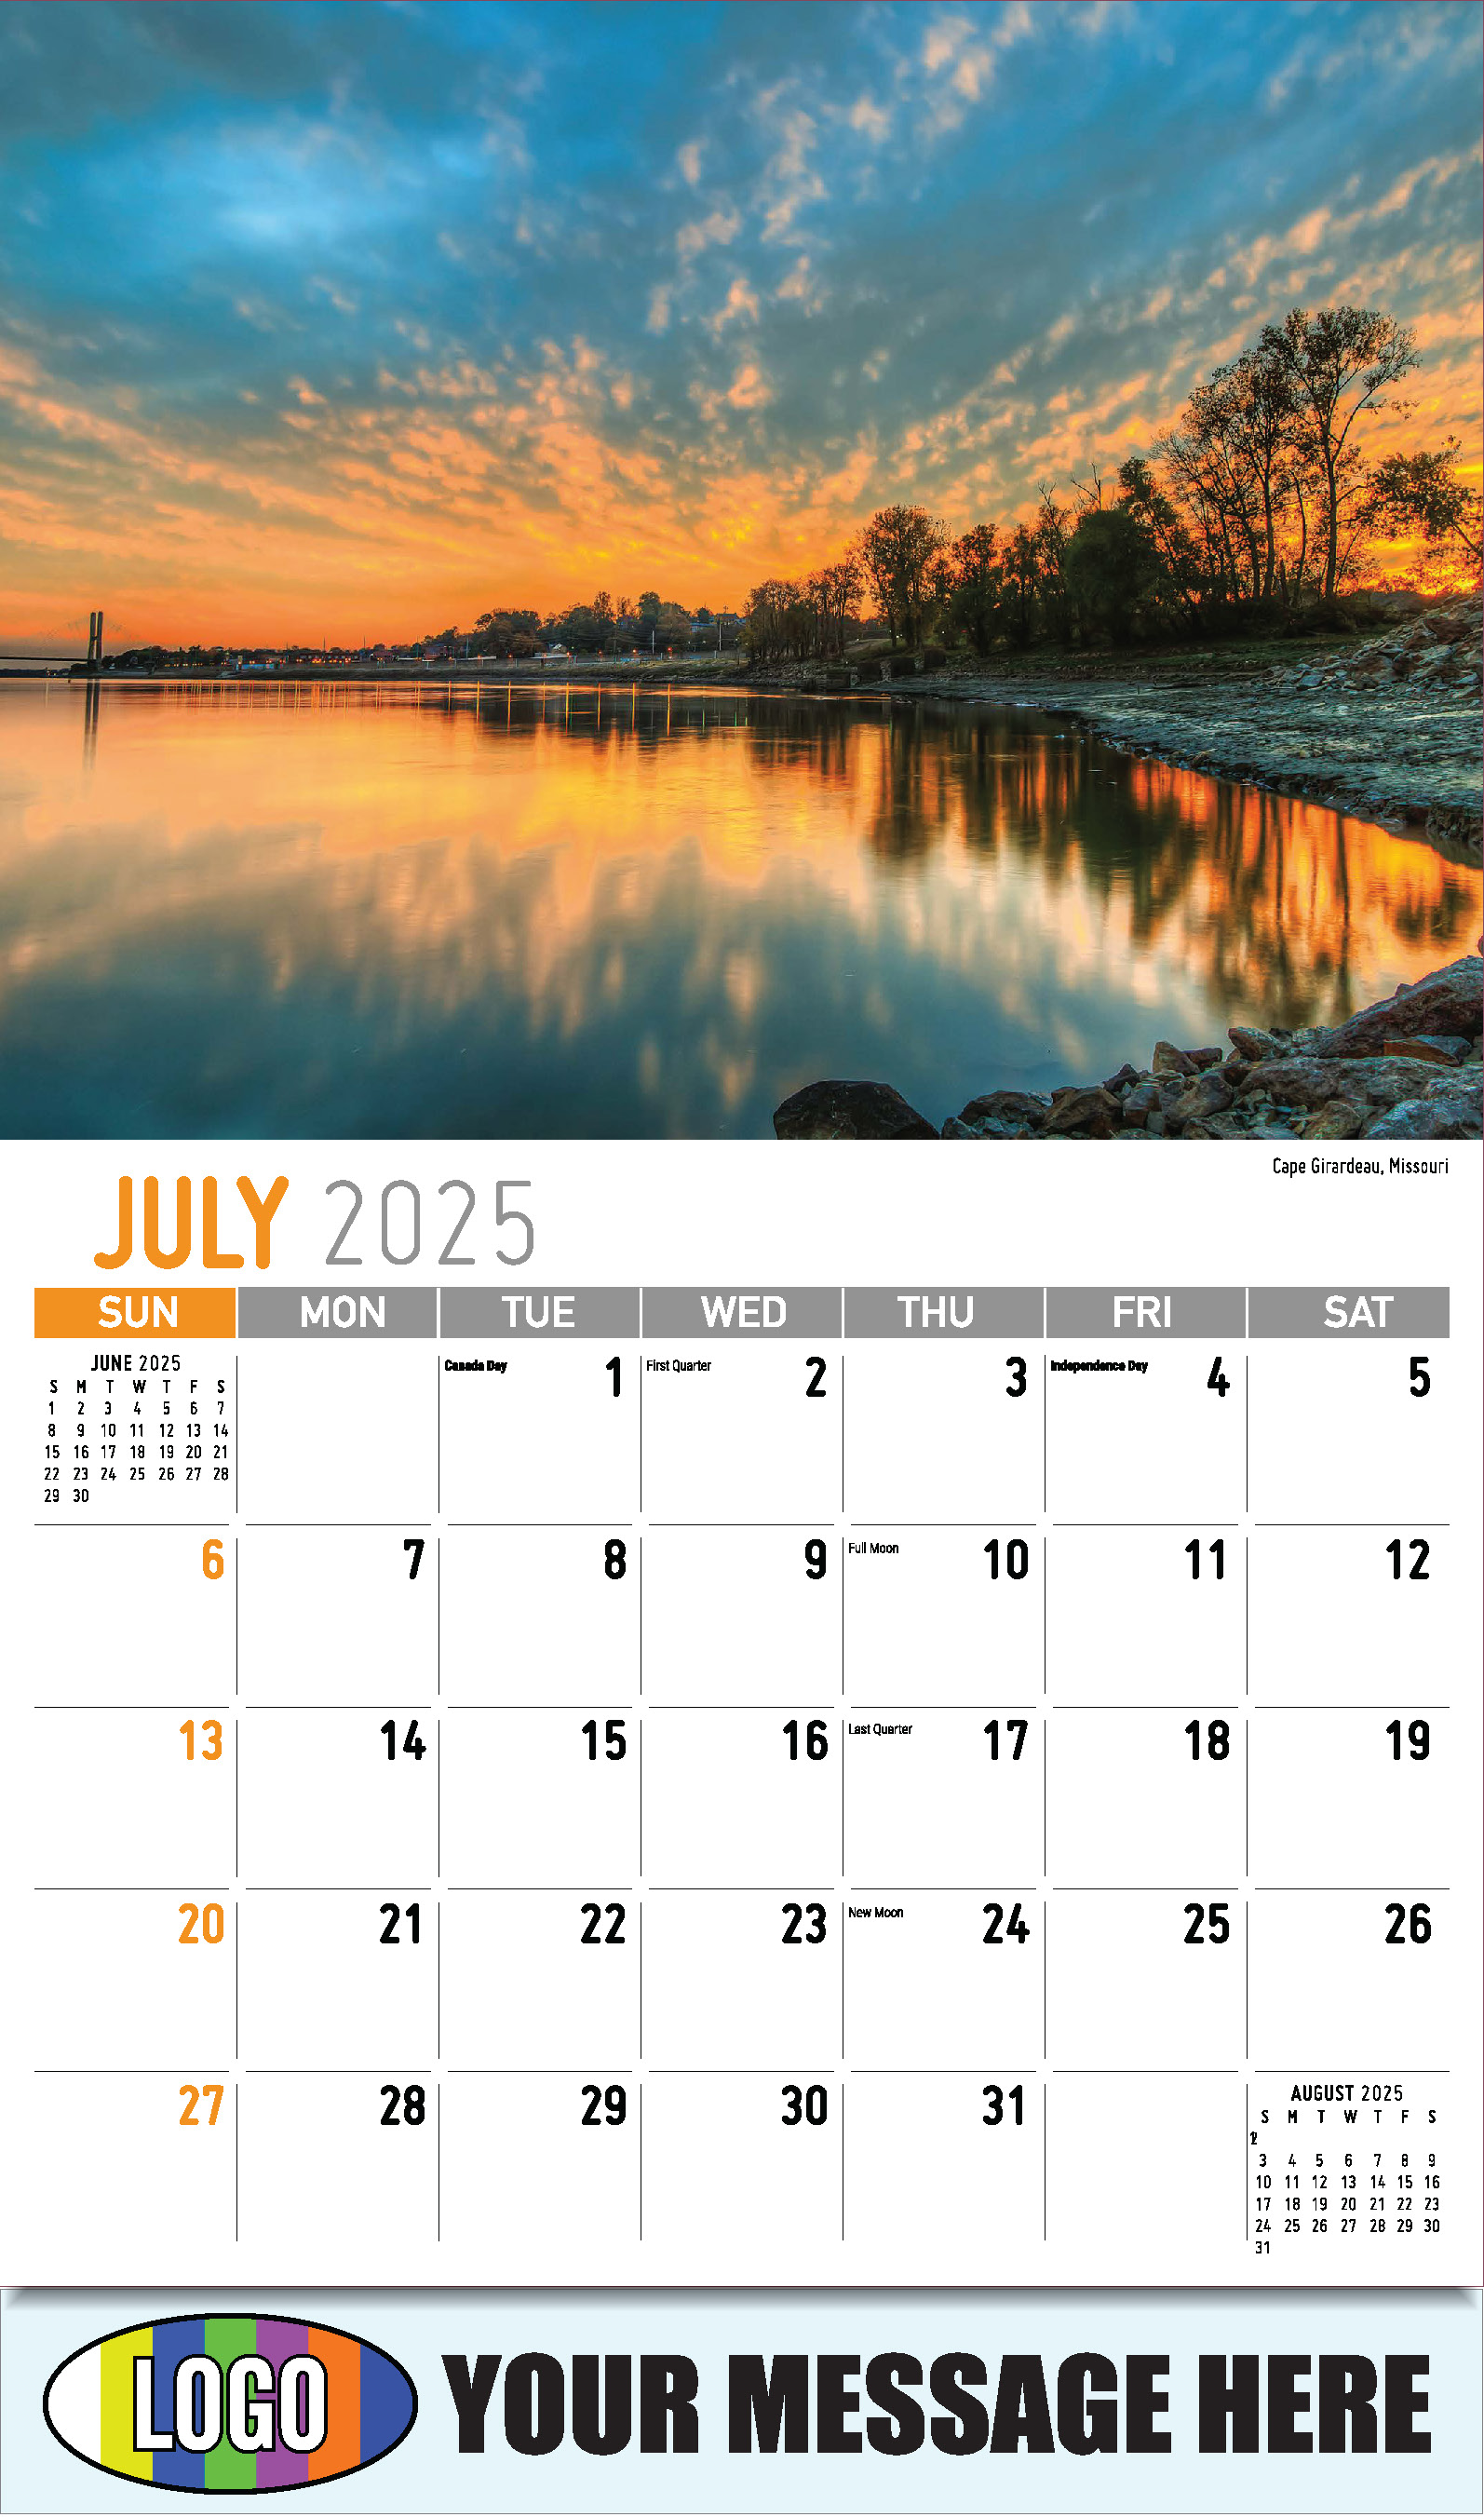 Scenes of America 2025 Business Advertising Wall Calendar - July